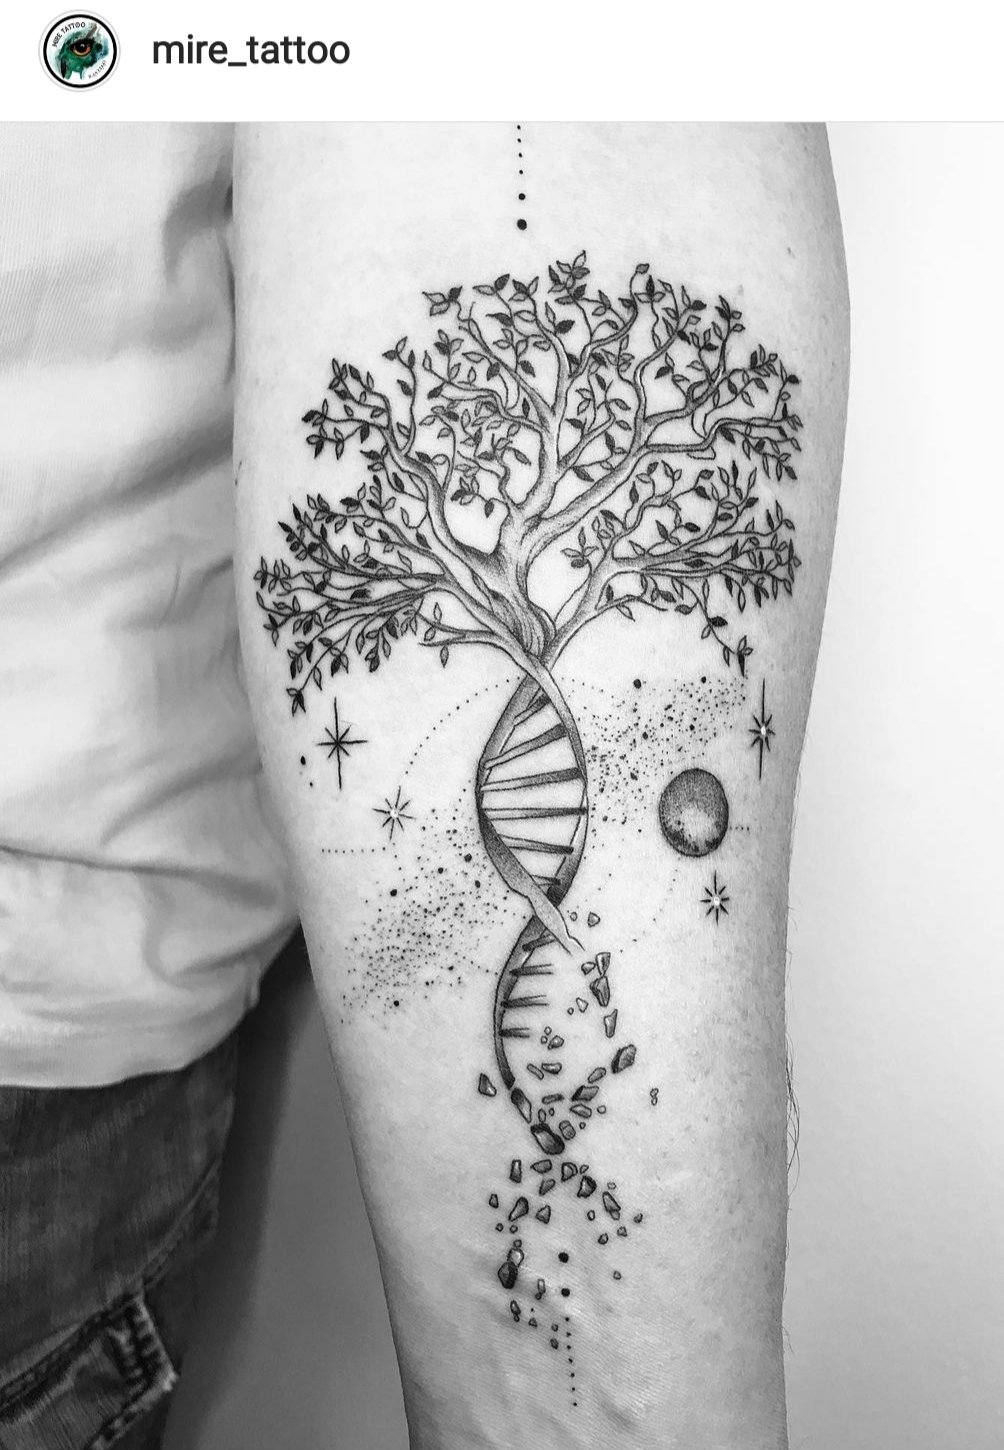 mire_tattoo on X: "Árbol de la vida!#familytattoo #tattooartist #adntattoo #tatuadora #santako #santacolomadegramanet #barcelona #bcnink #bcntattoo #tattoosbarcelona #tatuajes #diseños #personalizados #mire_tattoo #árbol # vida #familia #tattoosbcn ...